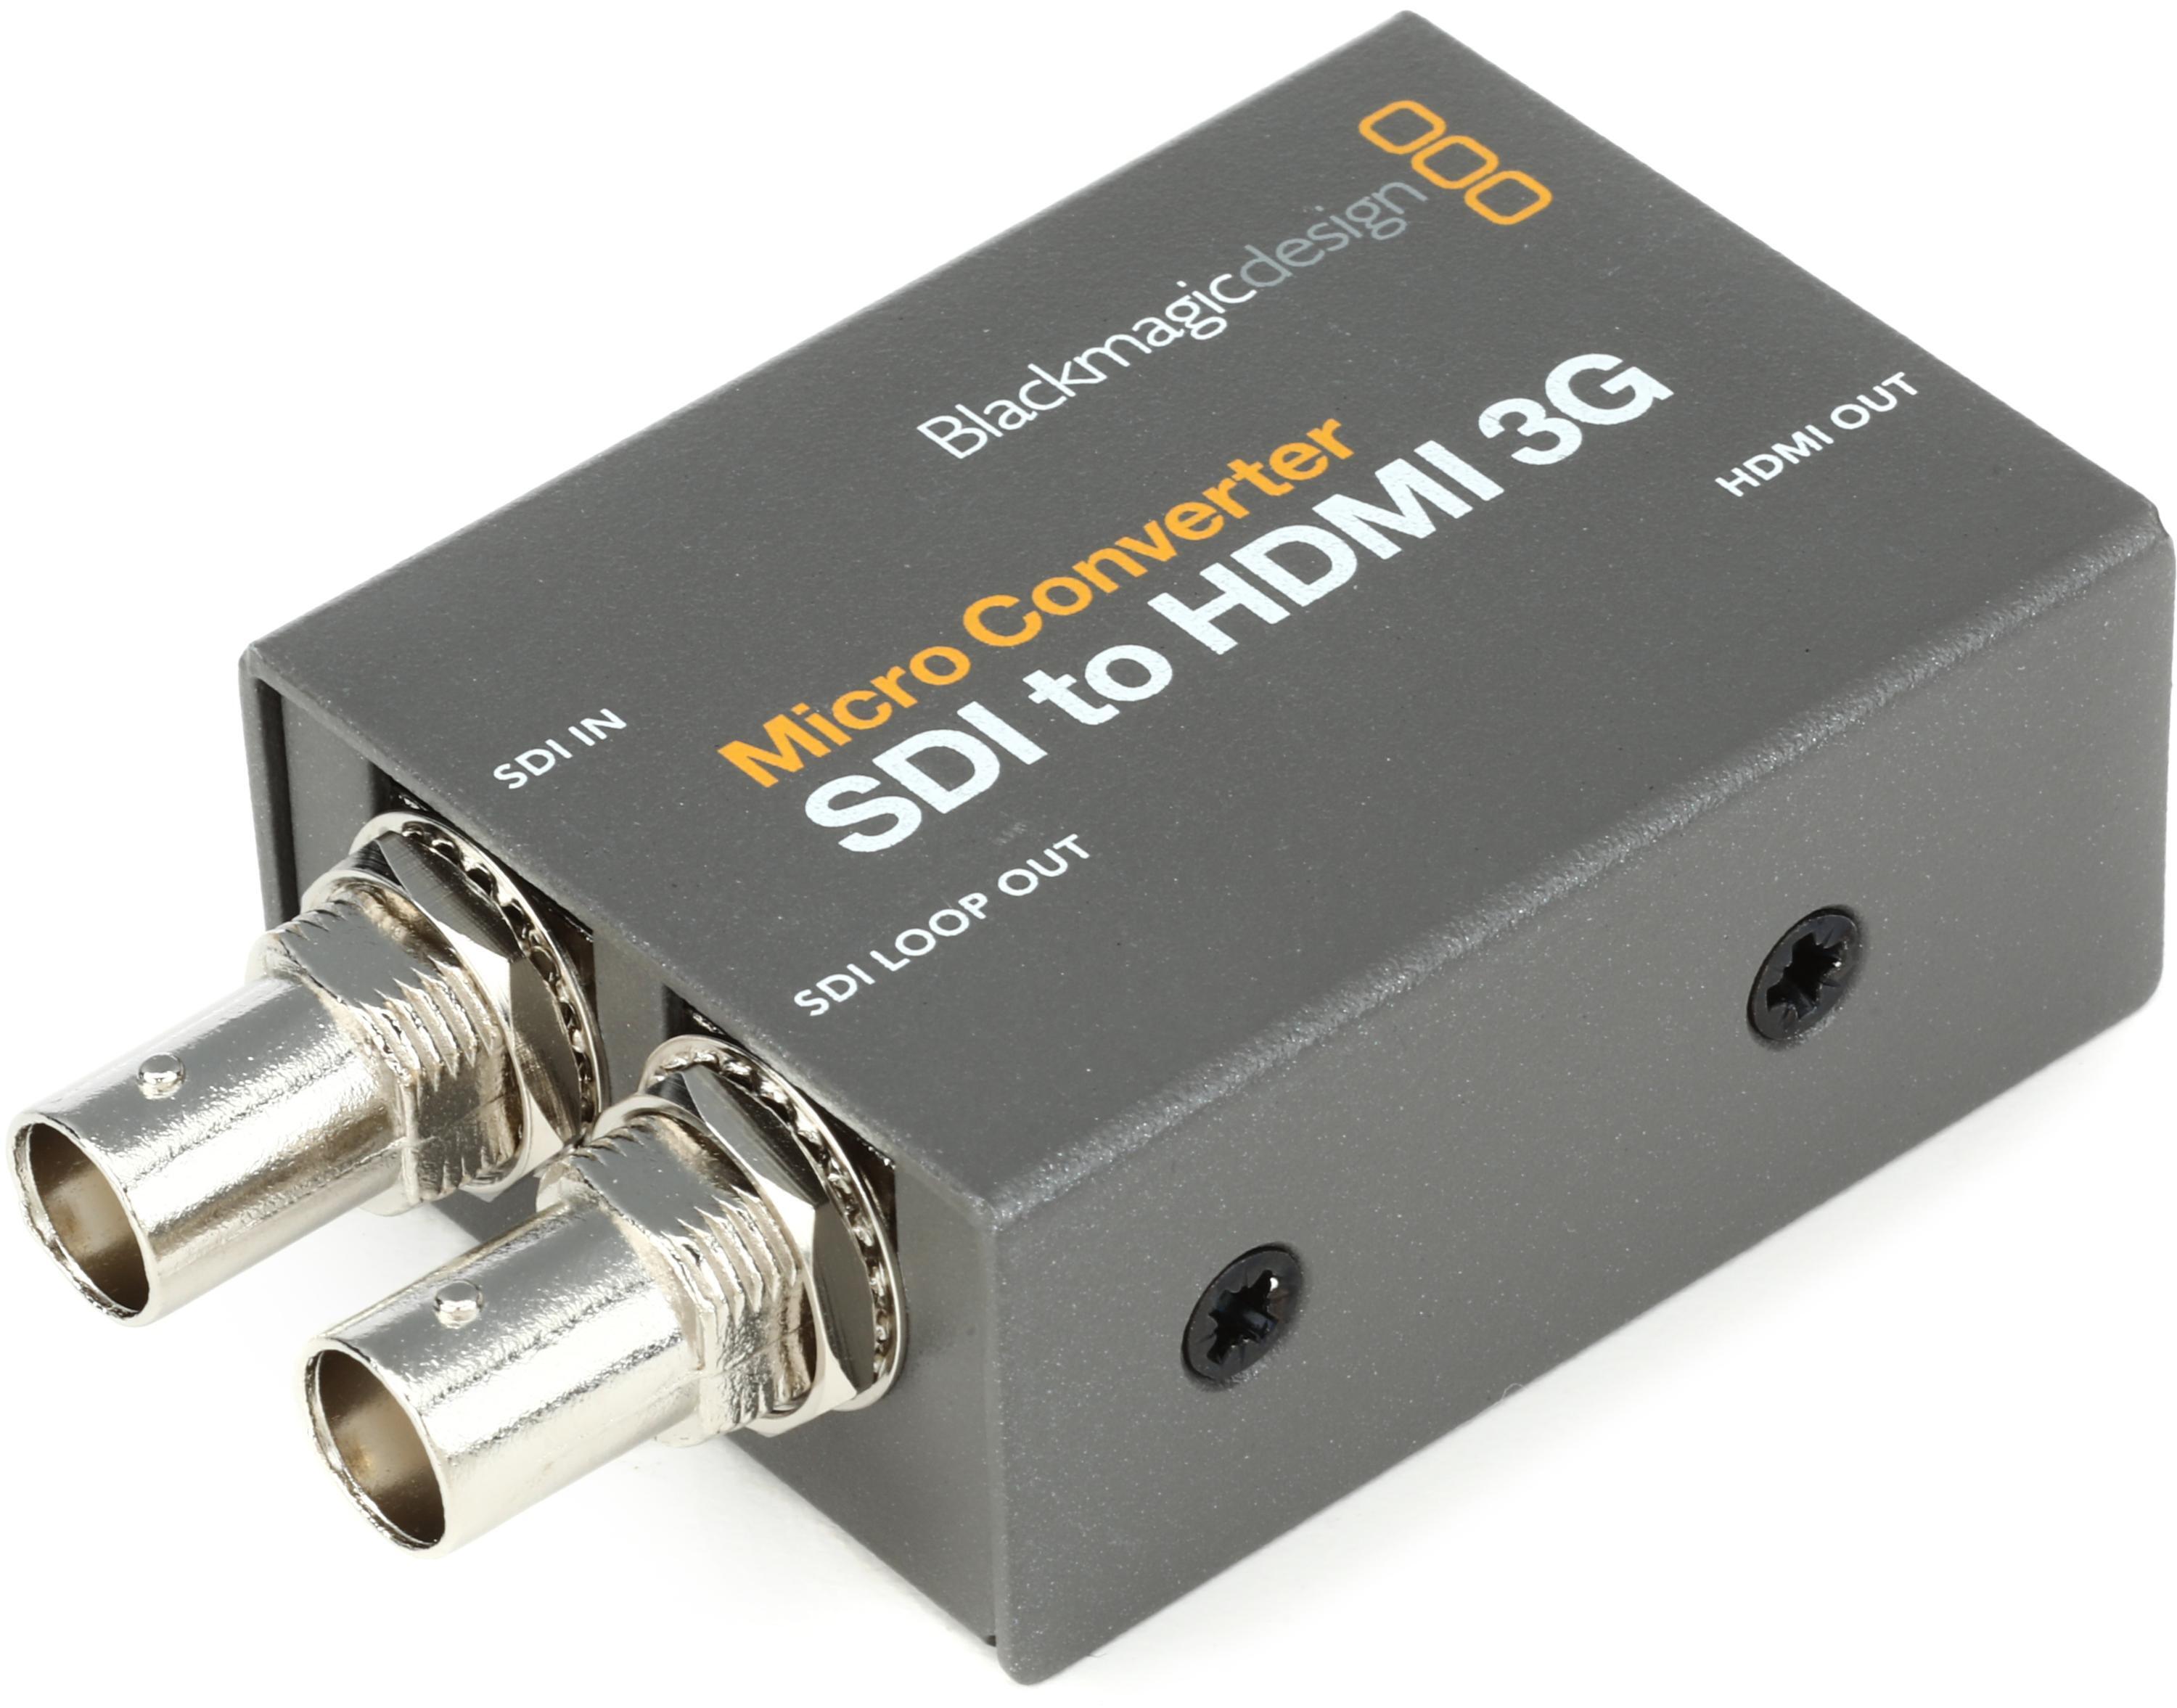 Blackmagic Design SDI to HDMI 3G Micro Converter | Sweetwater